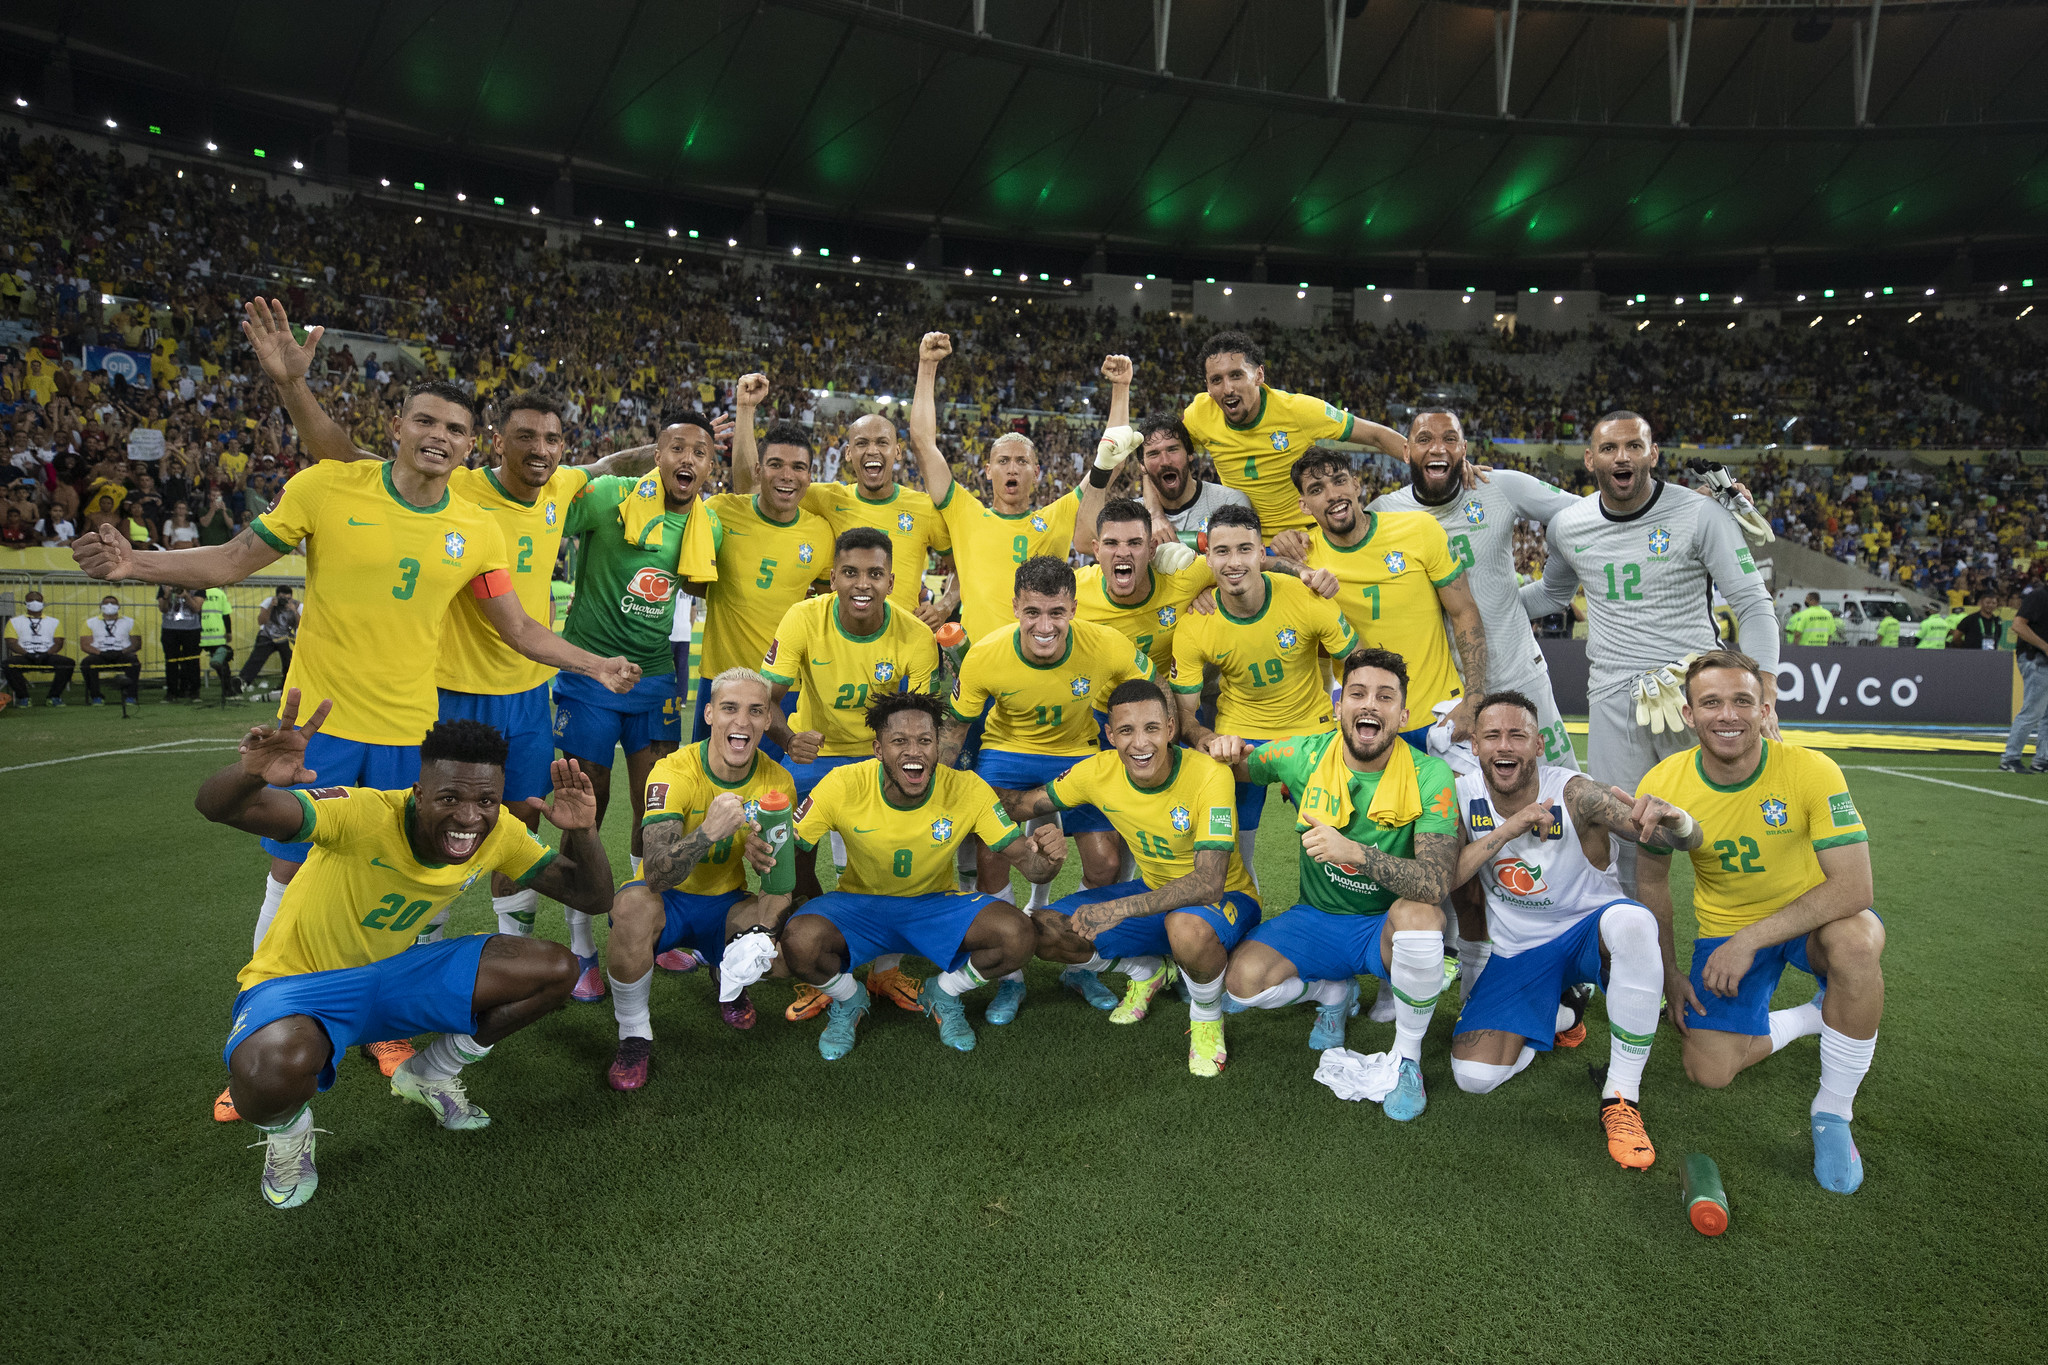 Todos os Jogos do Brasil na Copa do Mundo 2022 